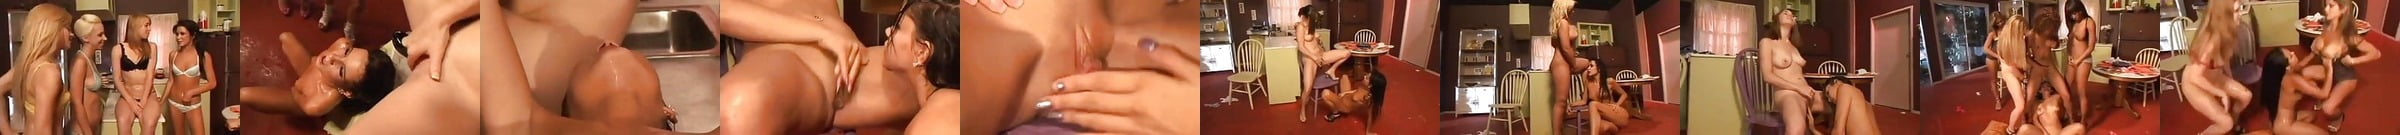 Huge Lesbian Squirting Orgy Free Lesbian Xxx Tube Porn Video